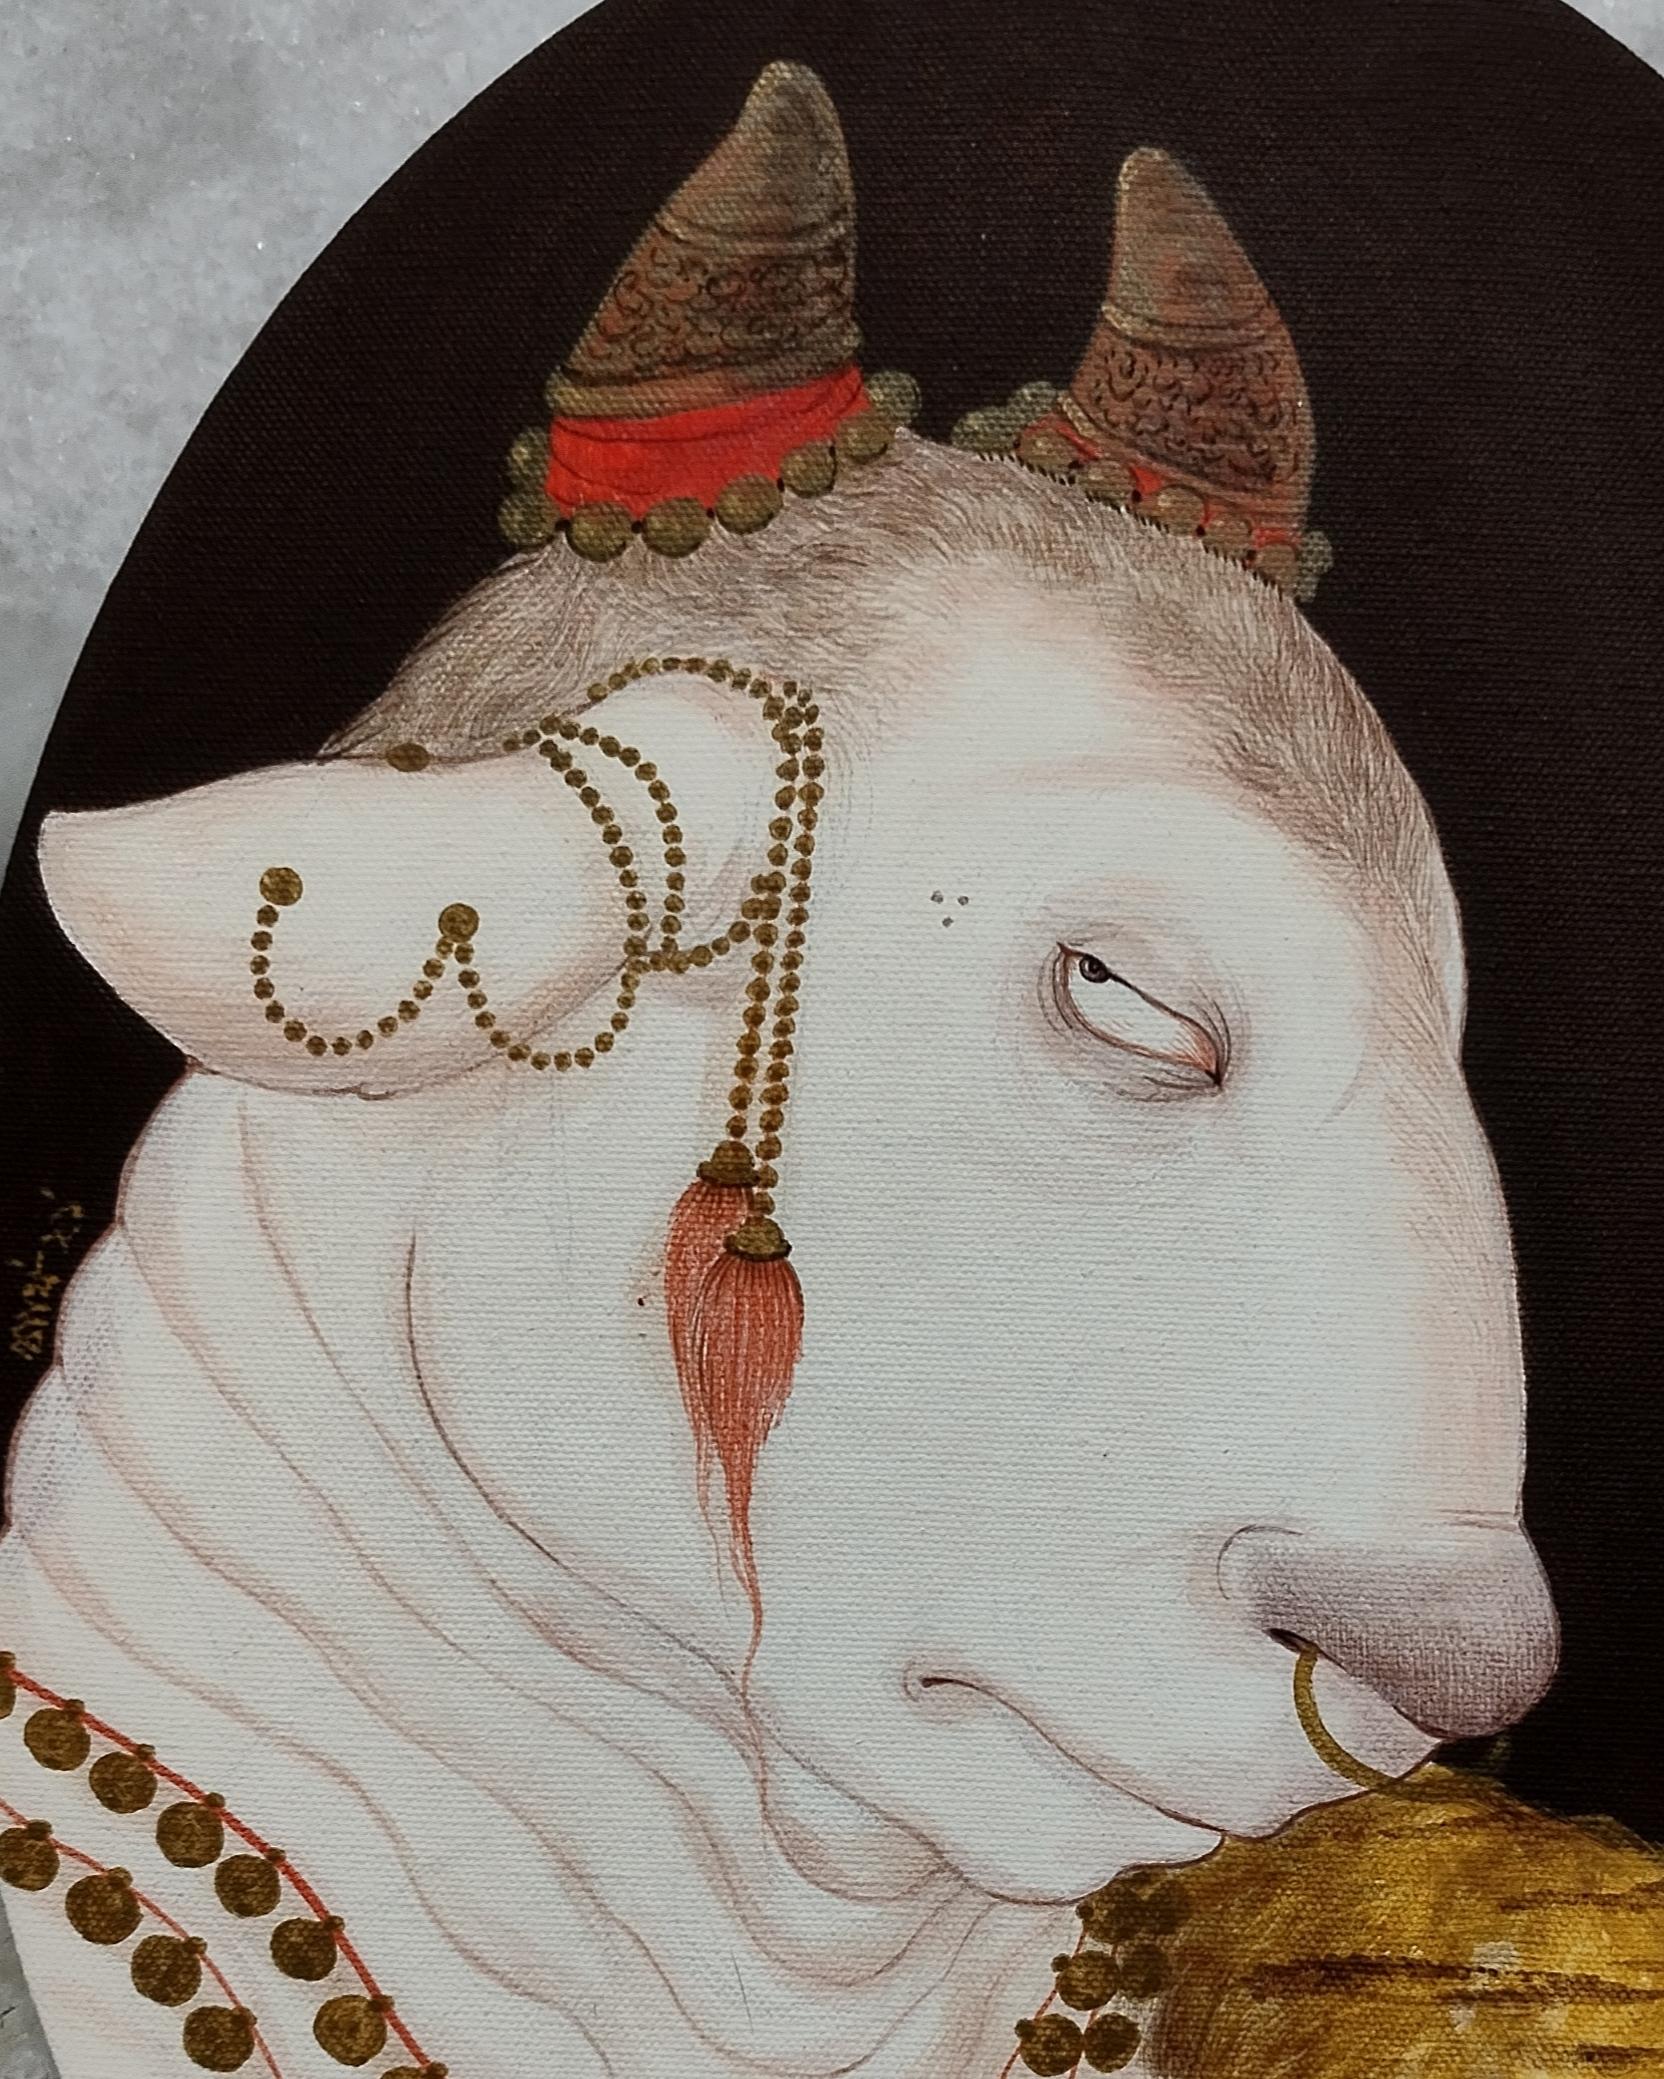 Nandi #1 - Painting by Partha Mondal